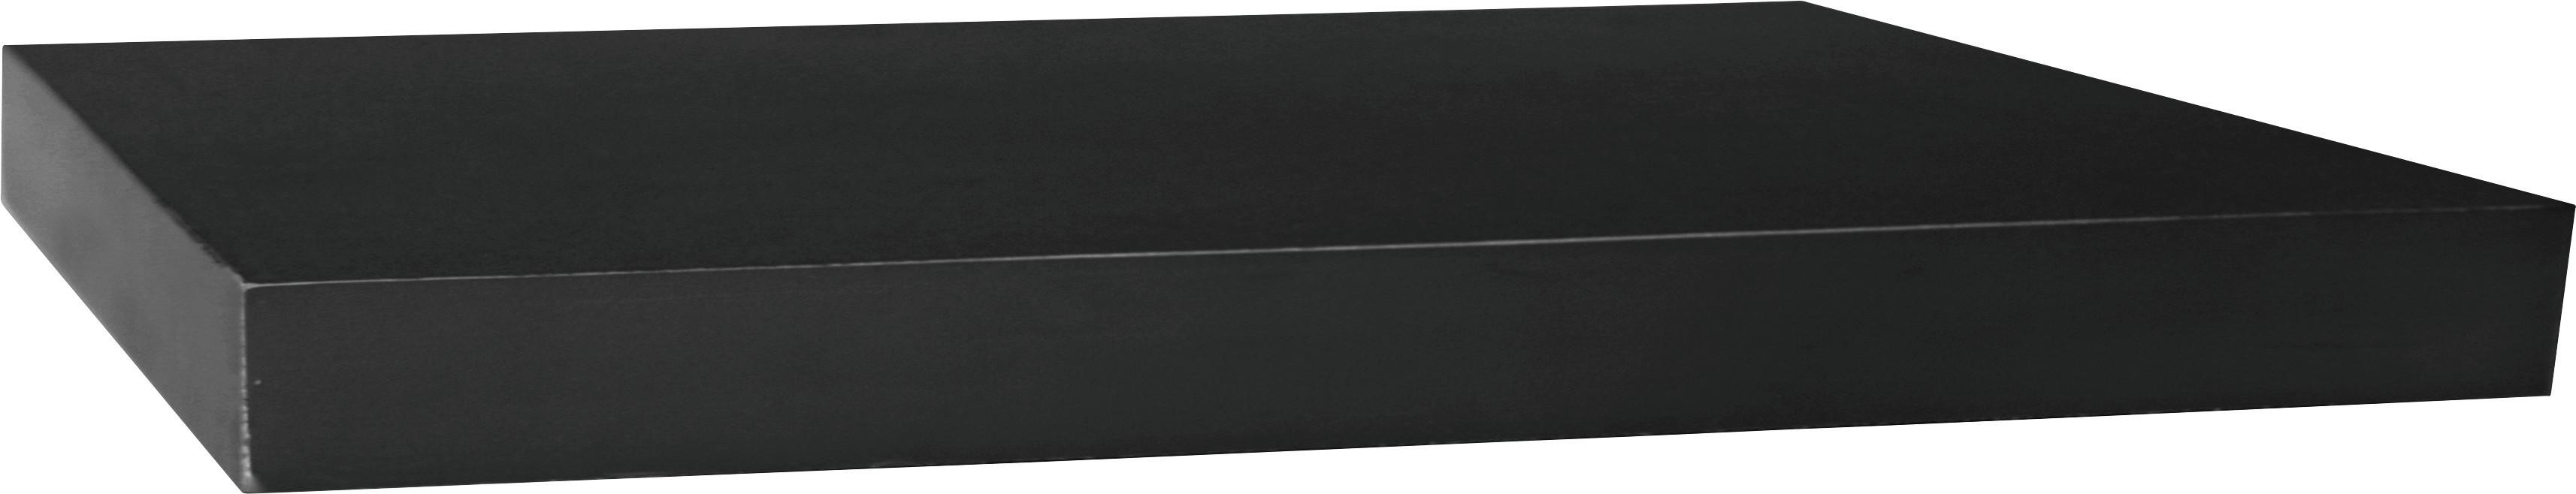 Wandboard Simple B:80cm, Schwarz